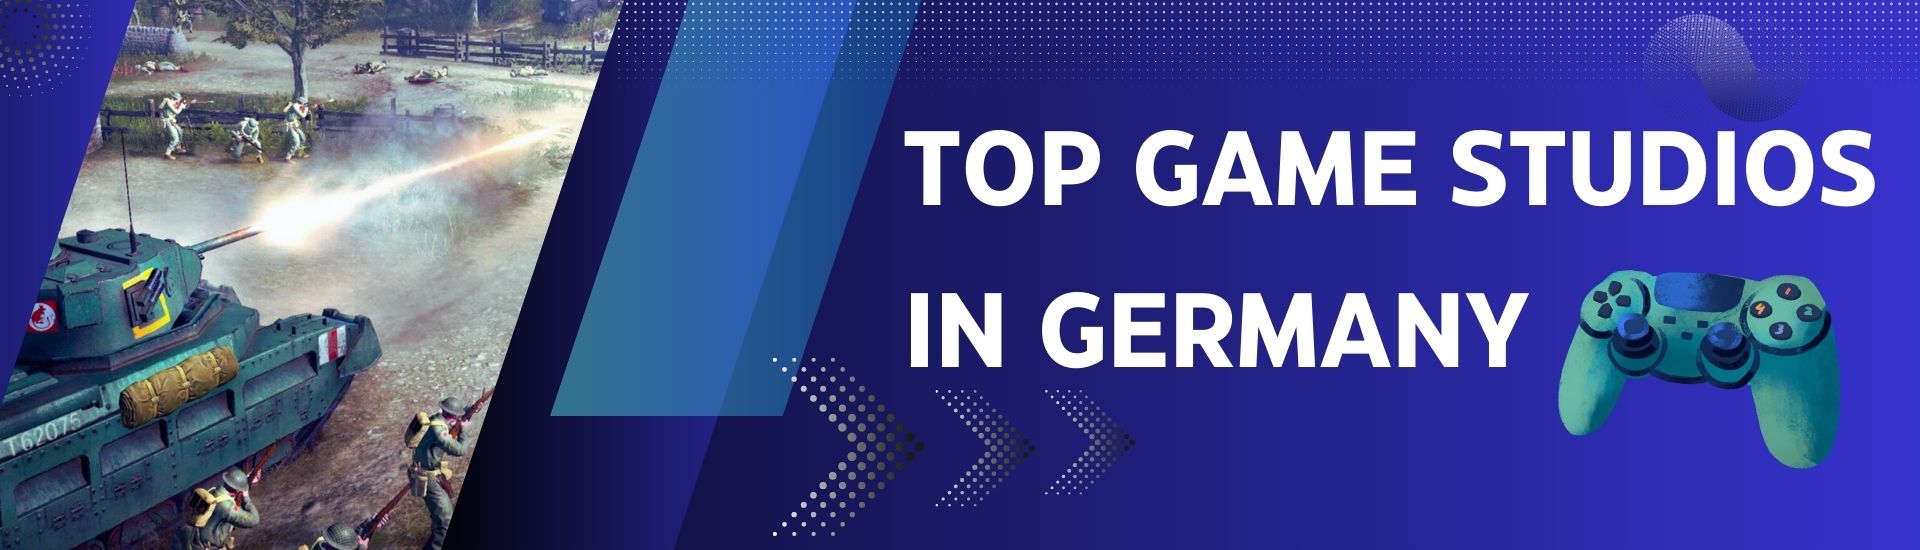 Top Game Studios in germany